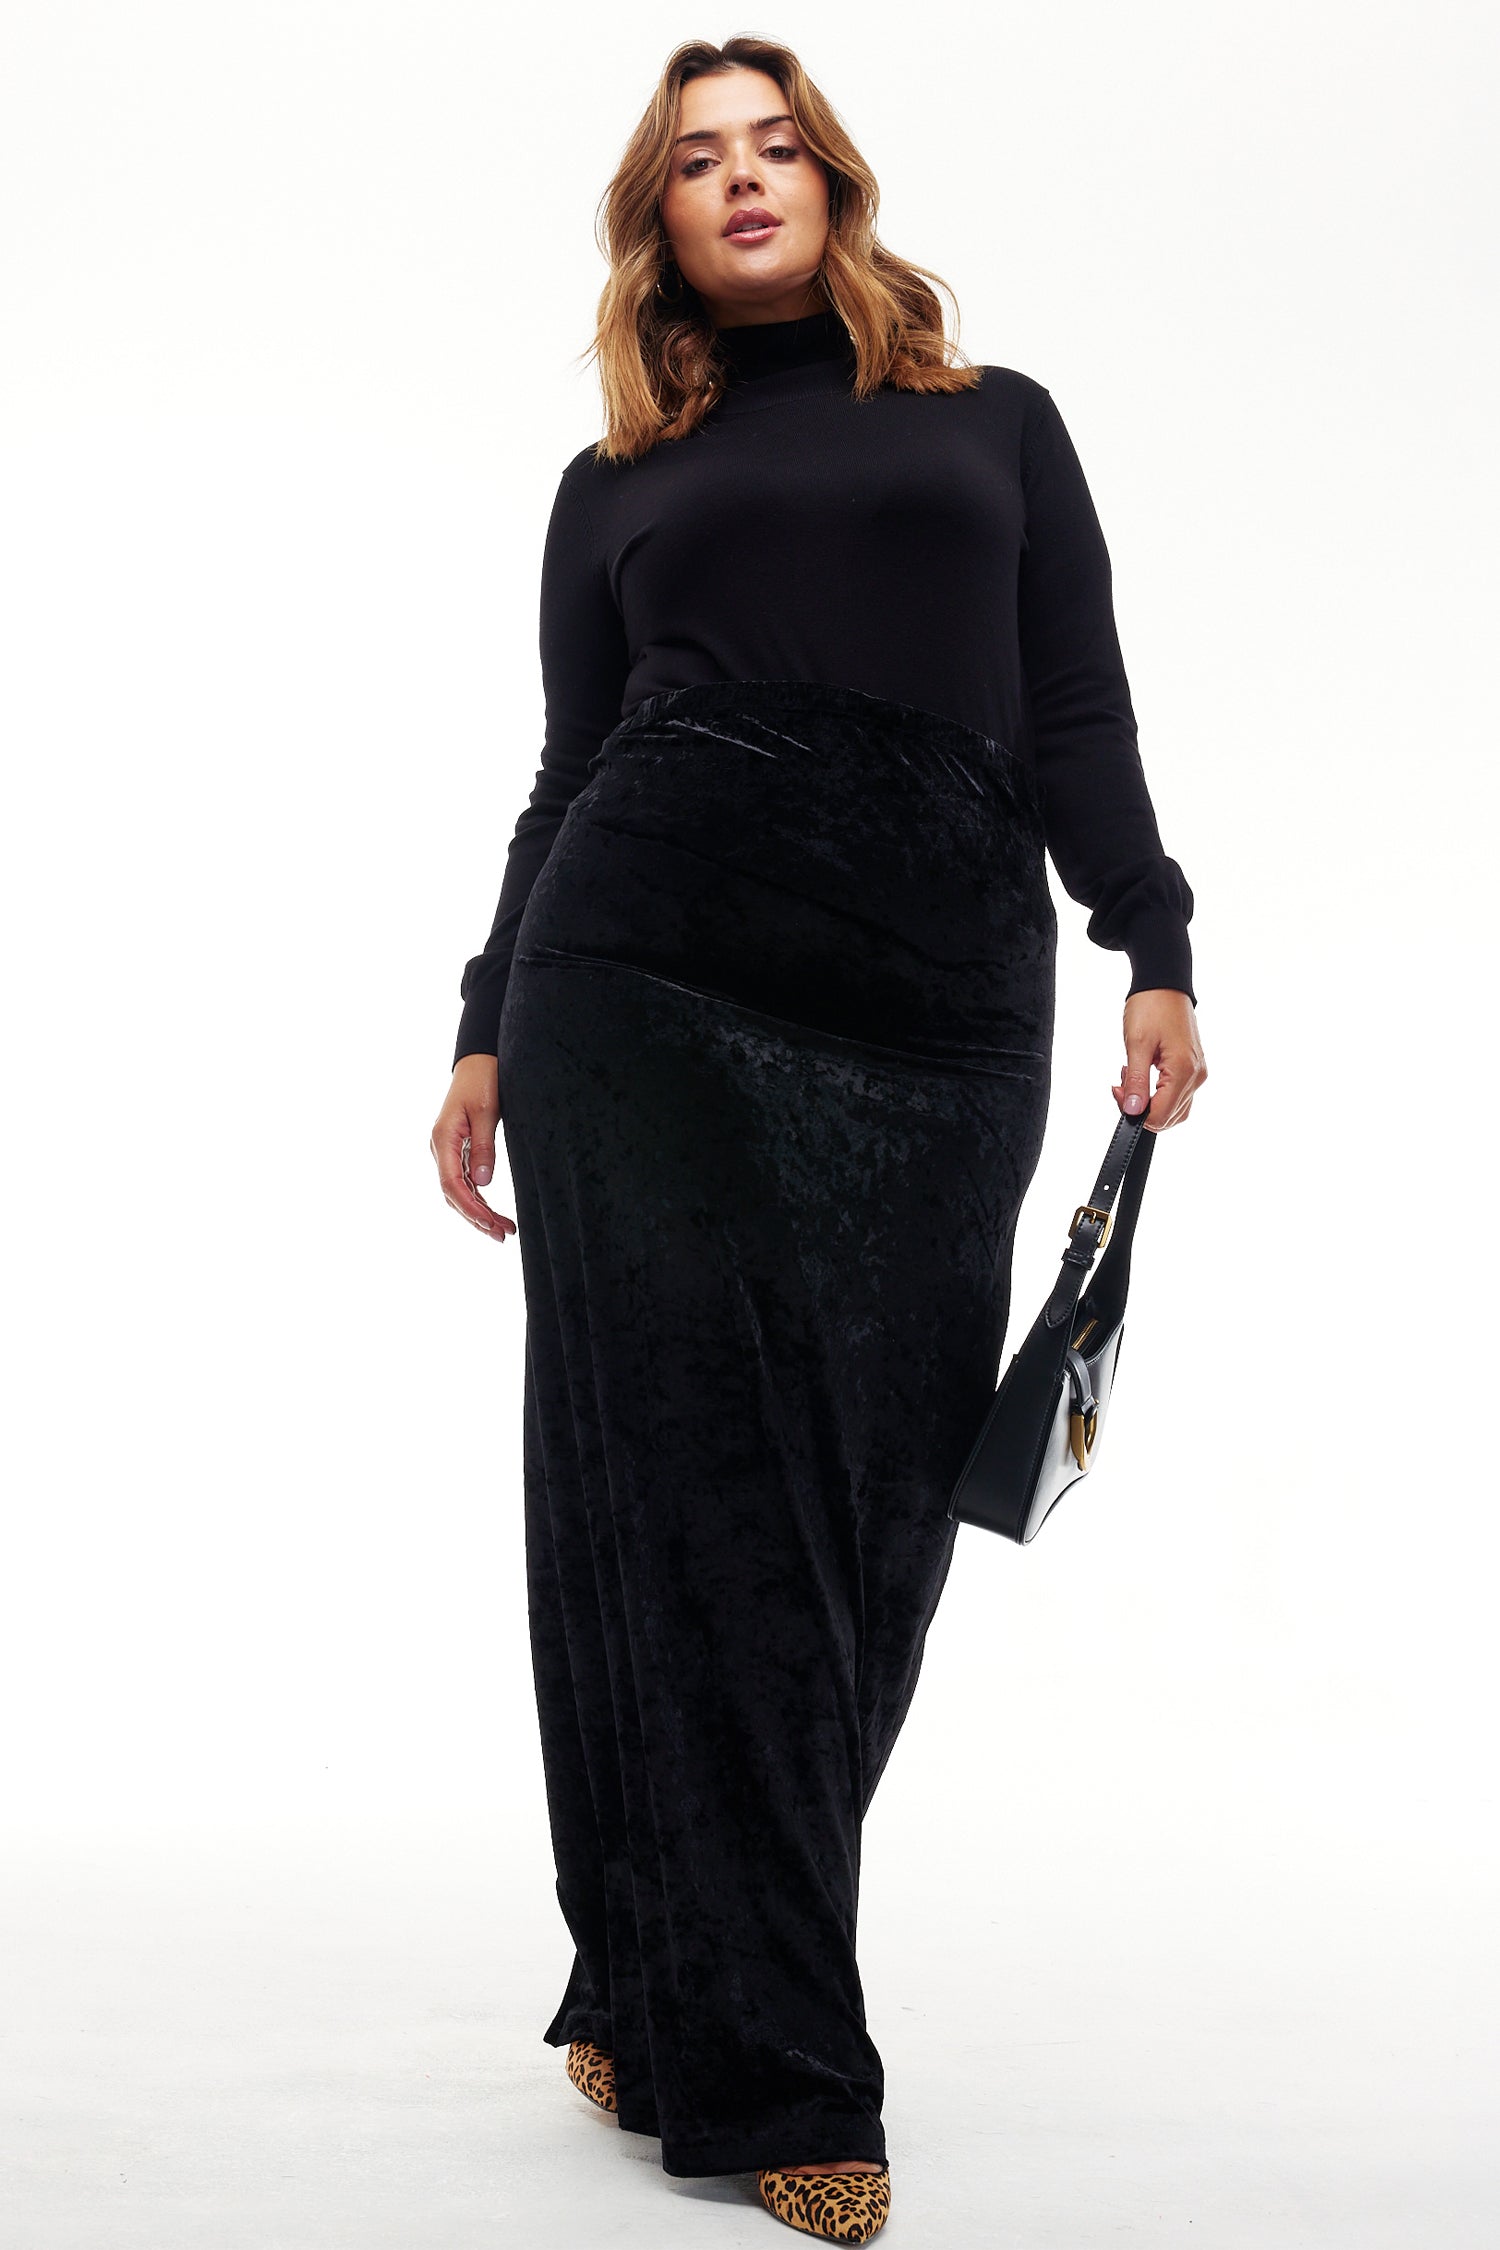 Model wearing Black Velvet Maxi Dress standing facing the camera